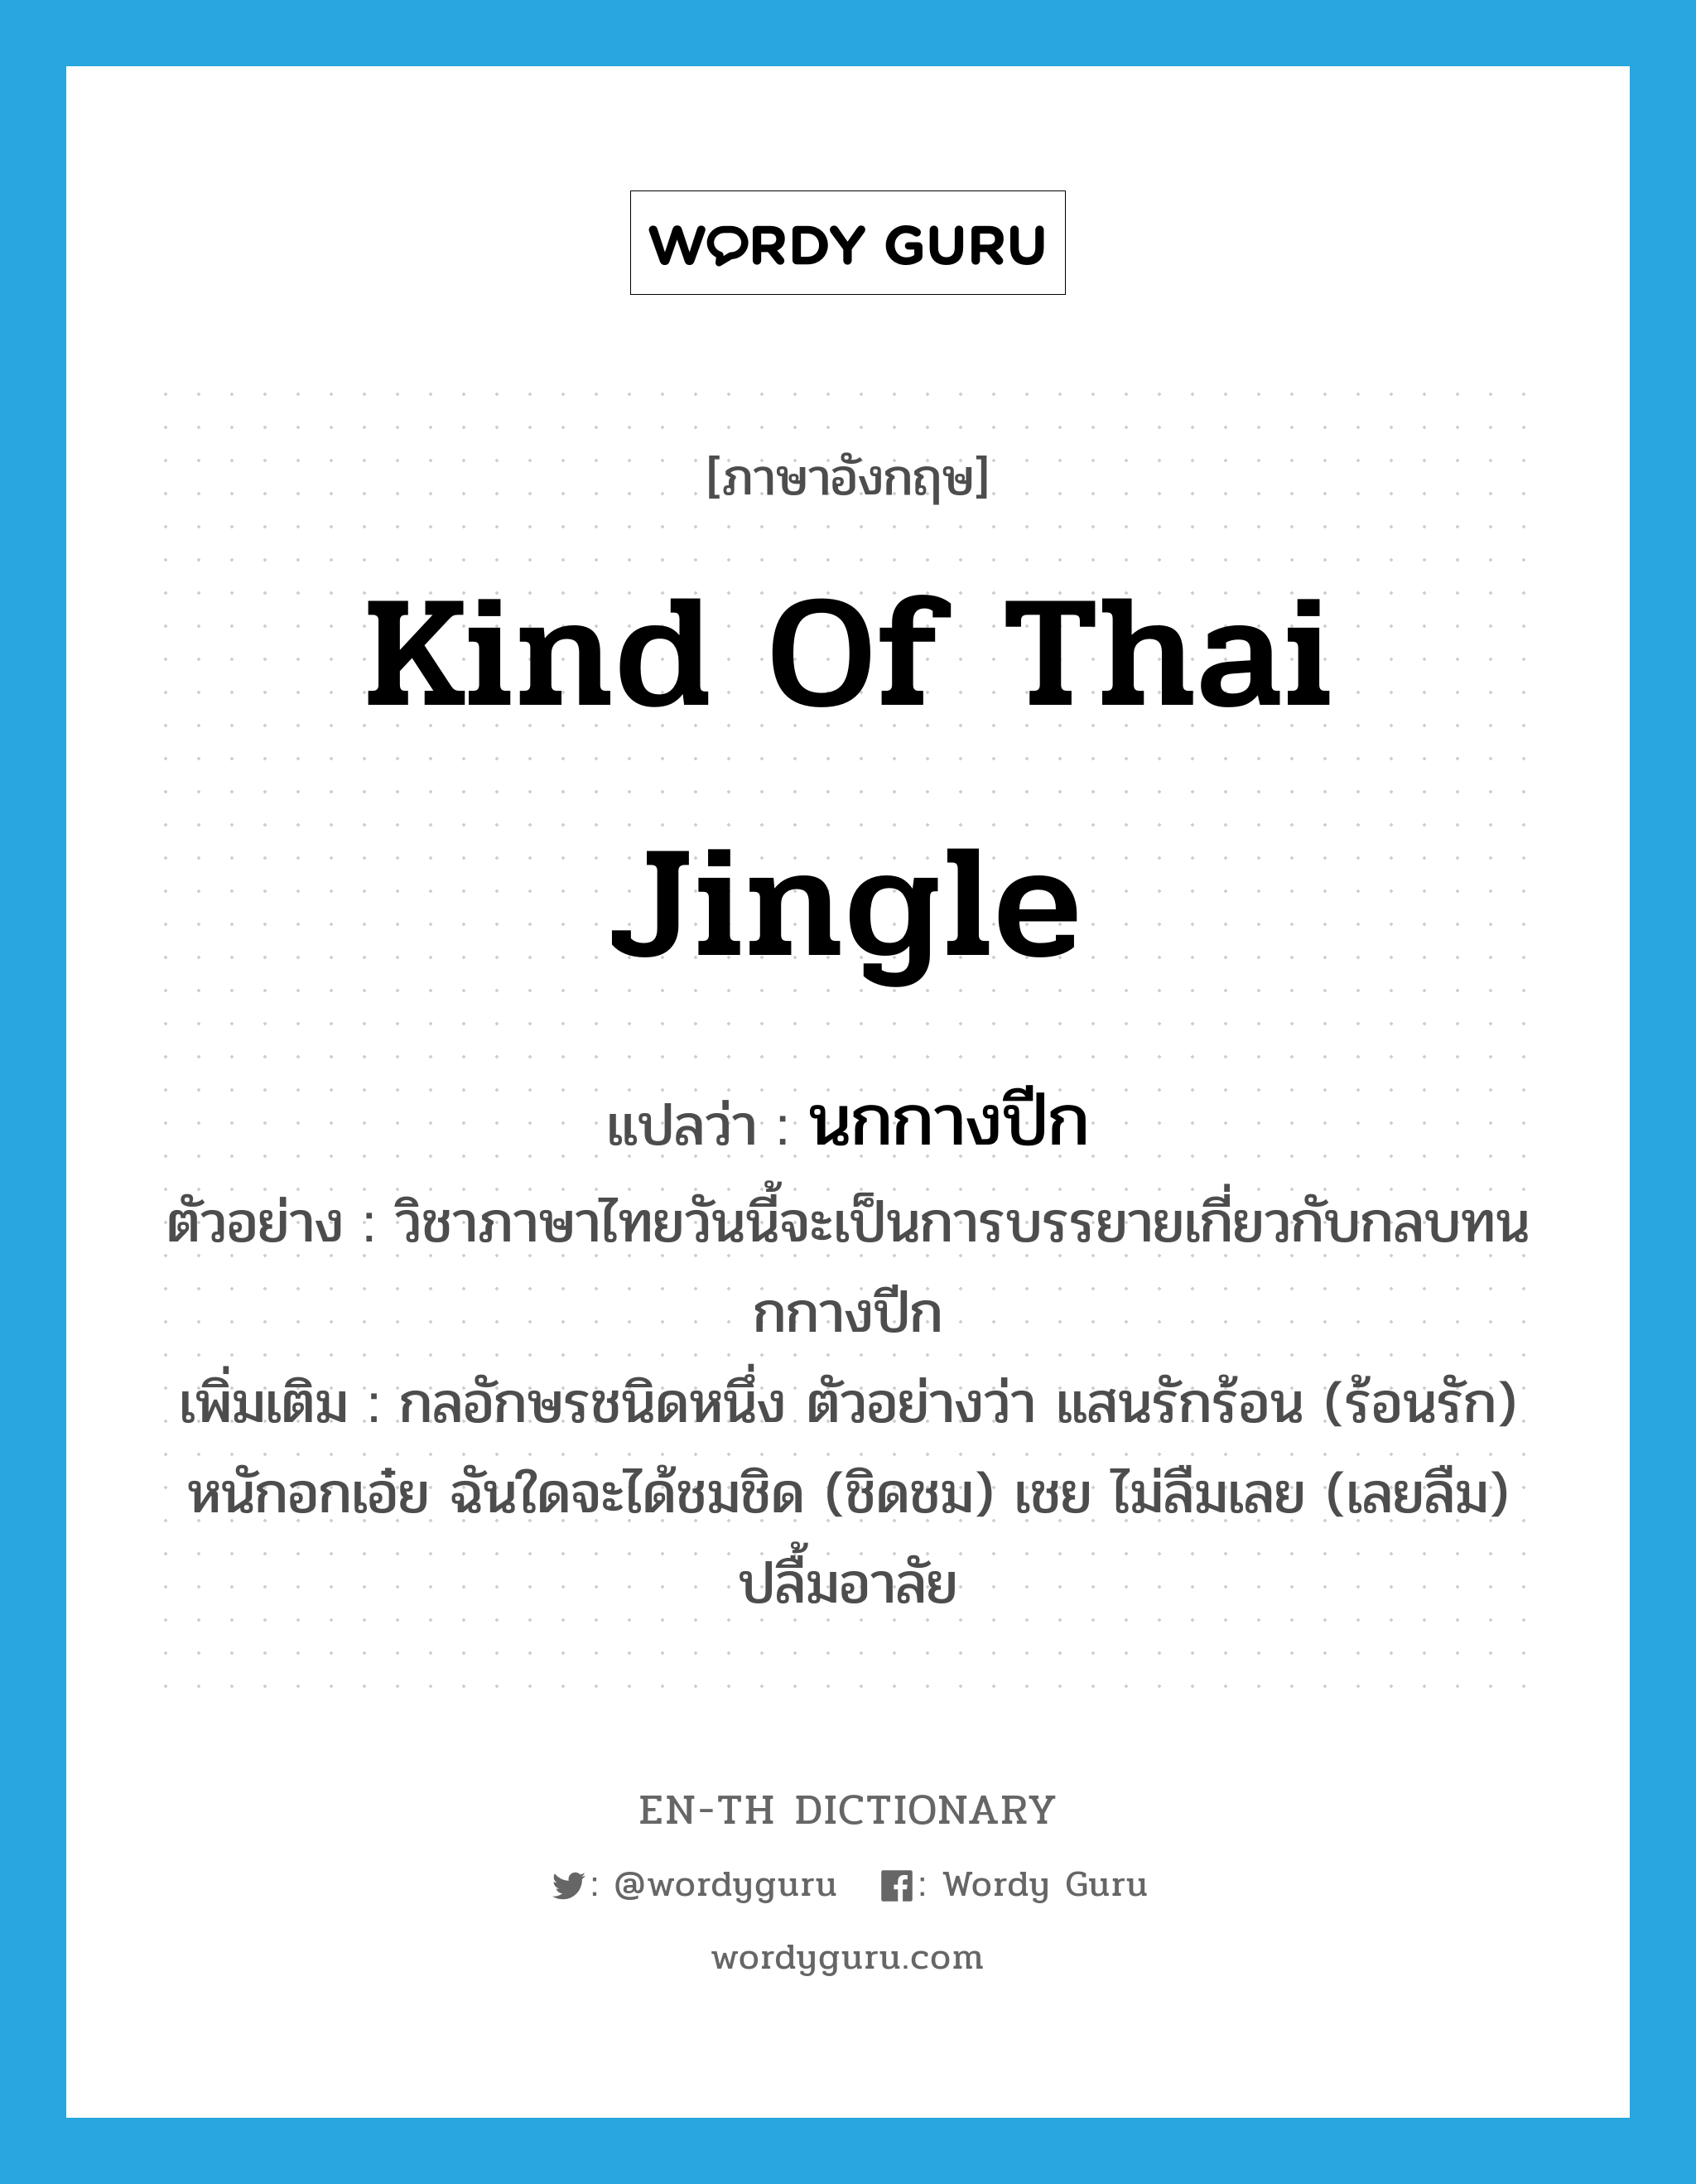 kind of Thai jingle แปลว่า?, คำศัพท์ภาษาอังกฤษ kind of Thai jingle แปลว่า นกกางปีก ประเภท N ตัวอย่าง วิชาภาษาไทยวันนี้จะเป็นการบรรยายเกี่ยวกับกลบทนกกางปีก เพิ่มเติม กลอักษรชนิดหนึ่ง ตัวอย่างว่า แสนรักร้อน (ร้อนรัก) หนักอกเอ๋ย ฉันใดจะได้ชมชิด (ชิดชม) เชย ไม่ลืมเลย (เลยลืม) ปลื้มอาลัย หมวด N